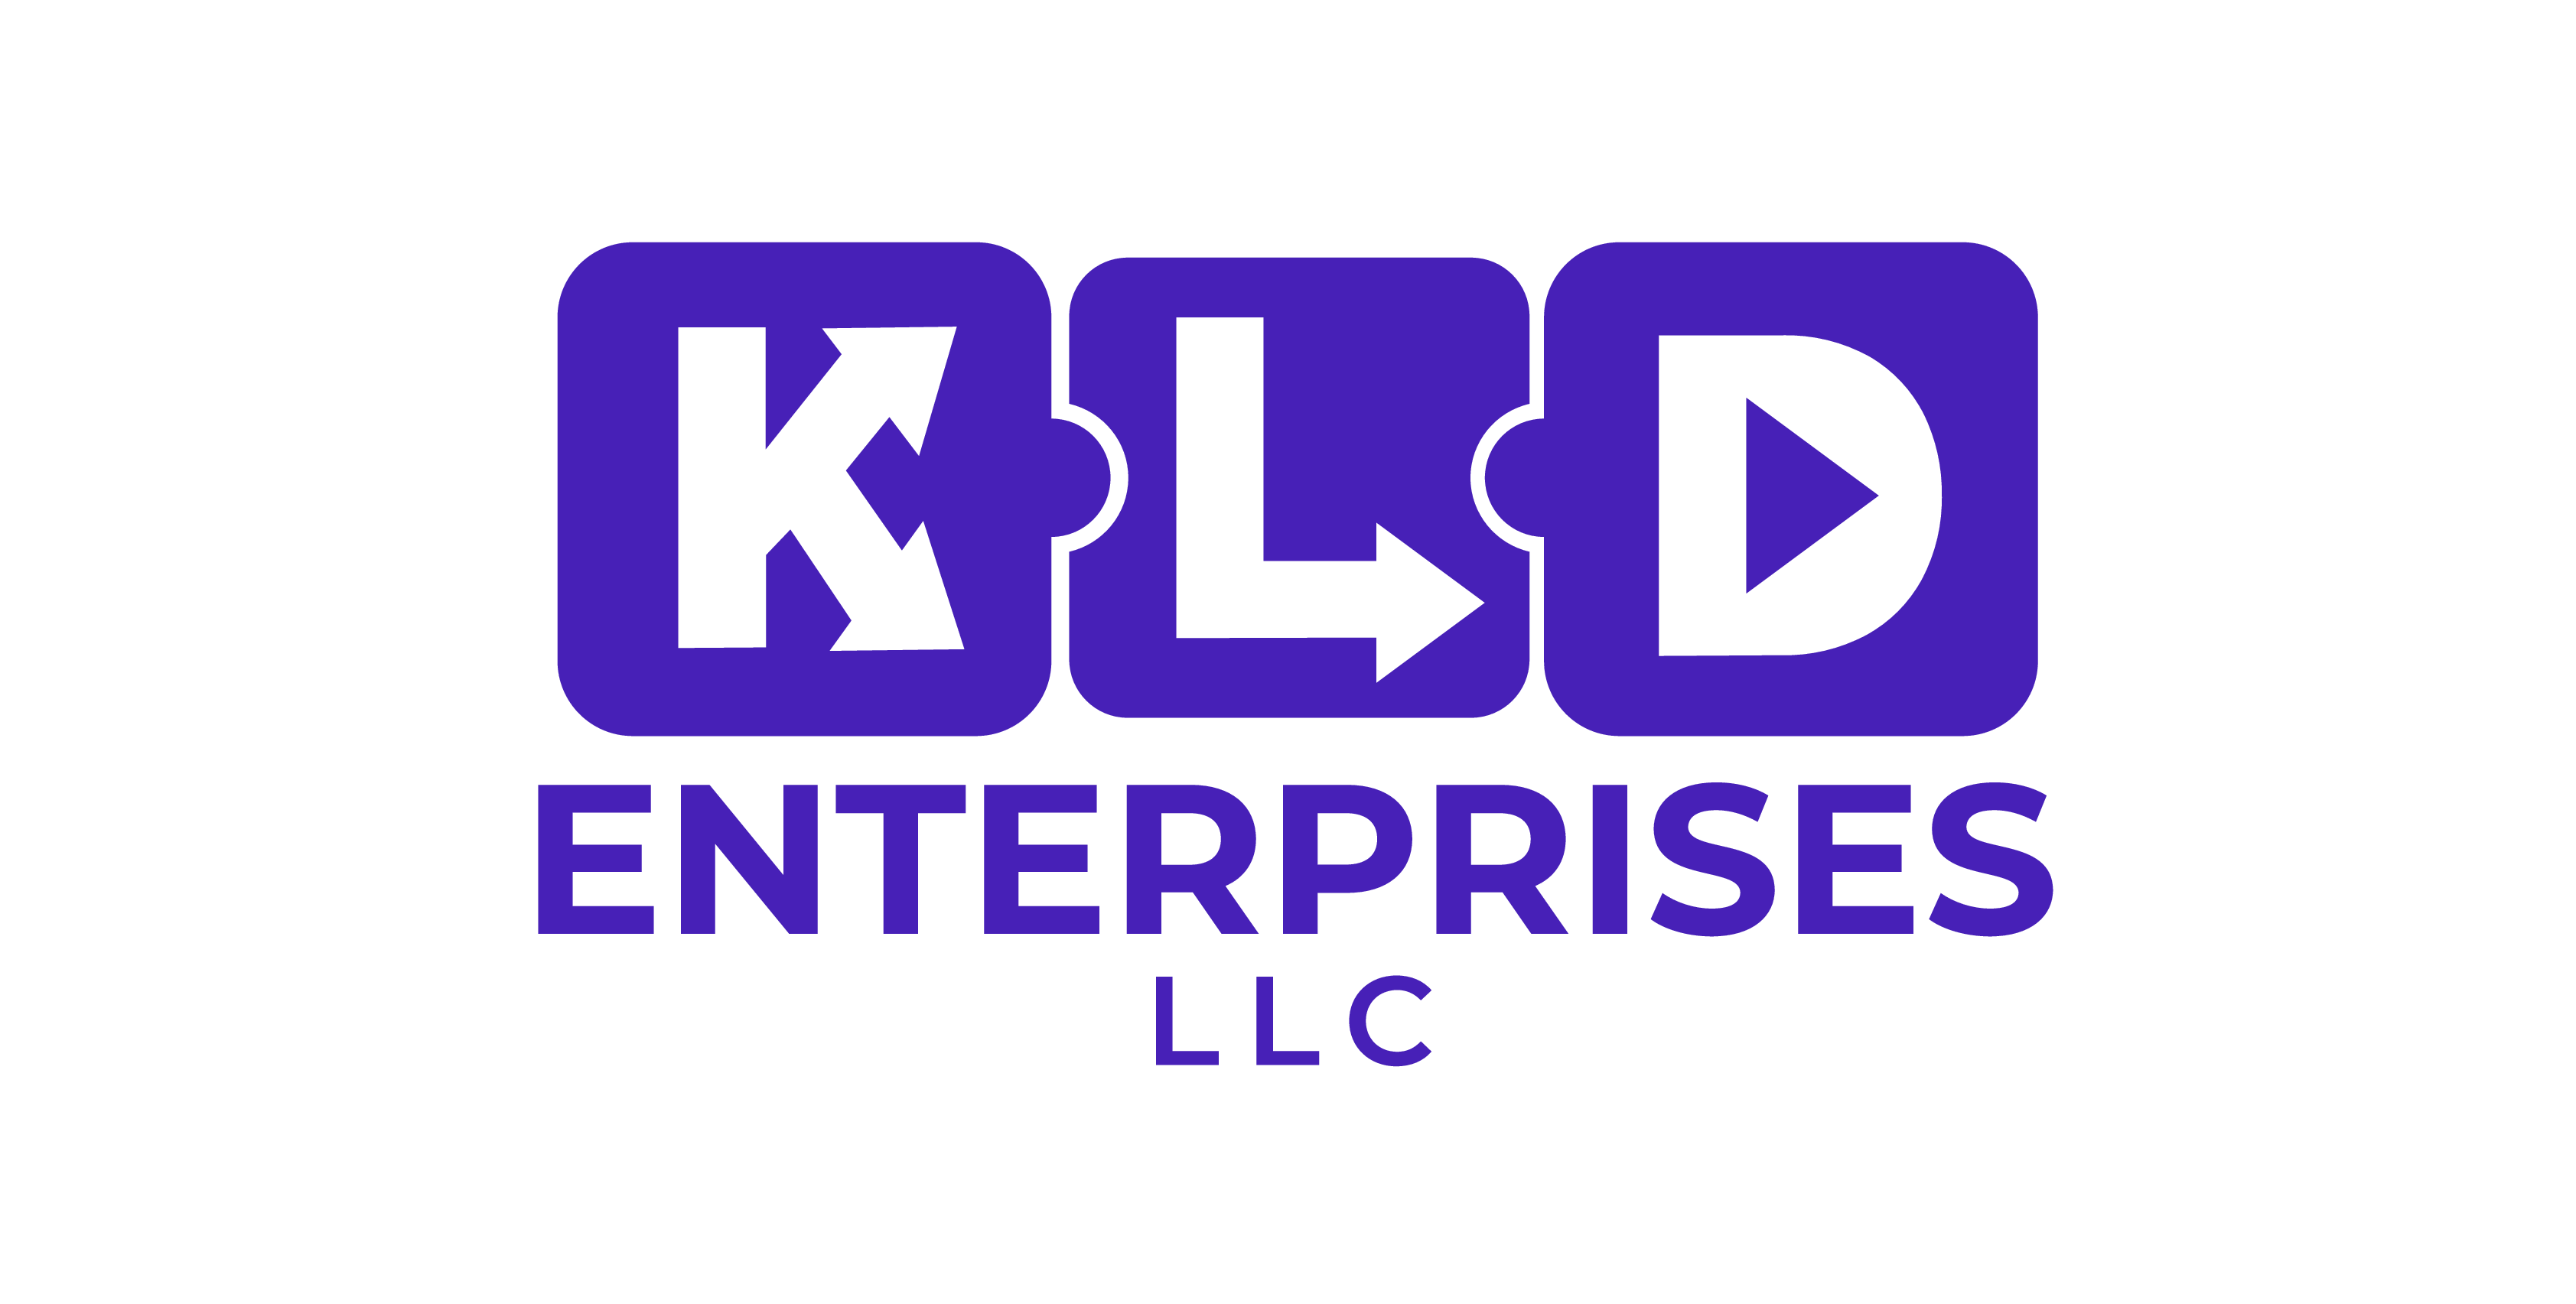 KLD Enterprises, LLC